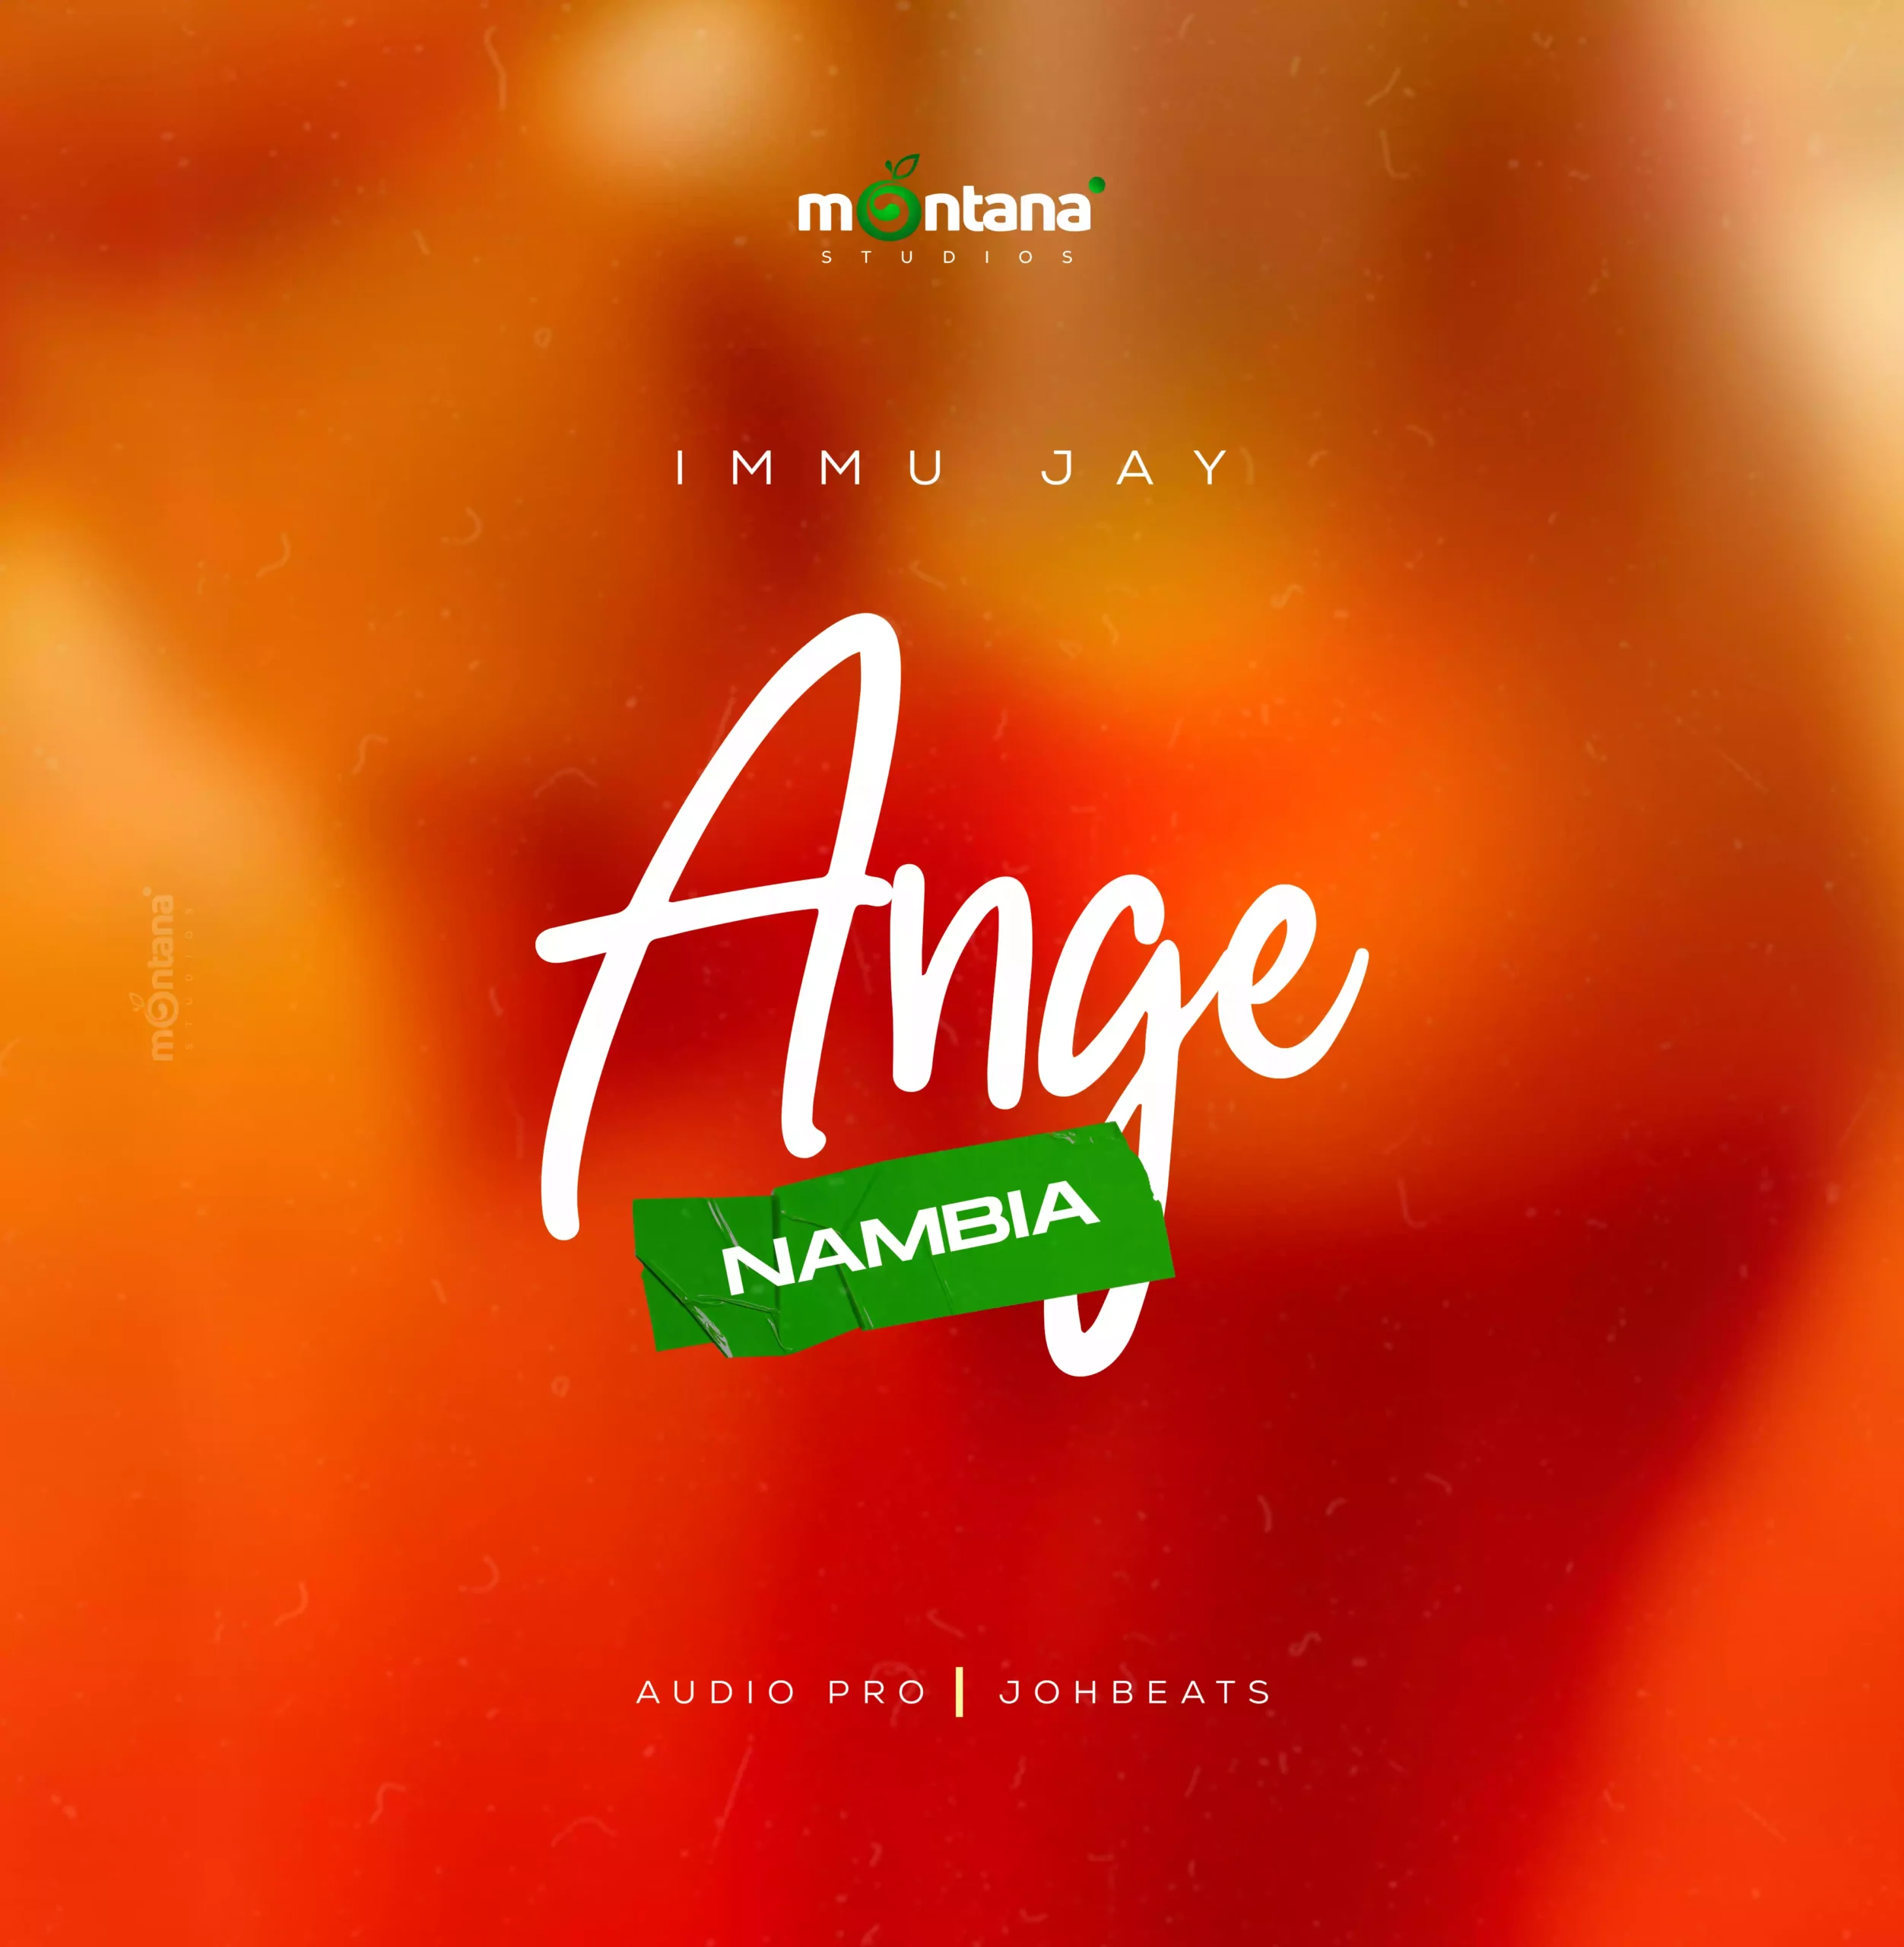 Angenambia By Immu Jay scaled